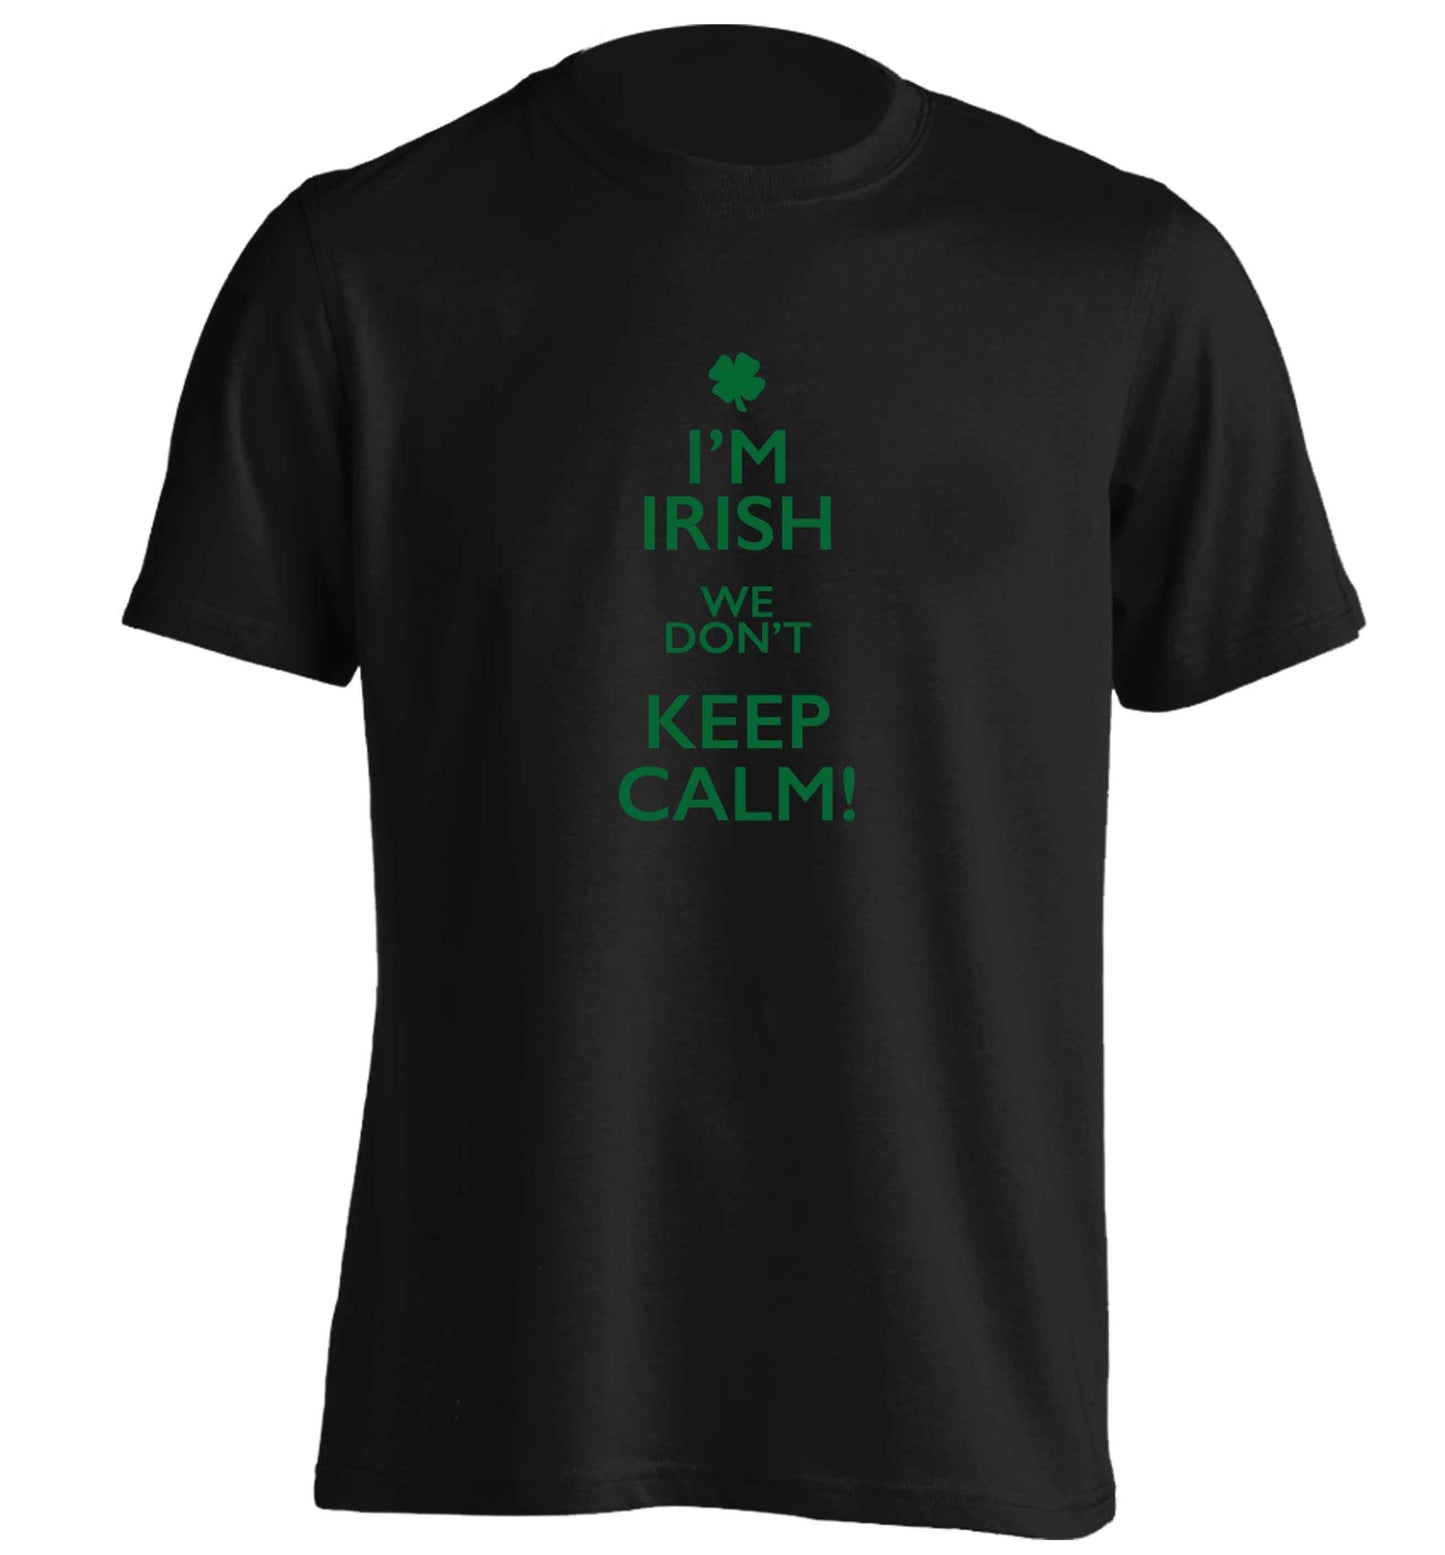 I'm Irish we don't keep calm adults unisex black Tshirt 2XL